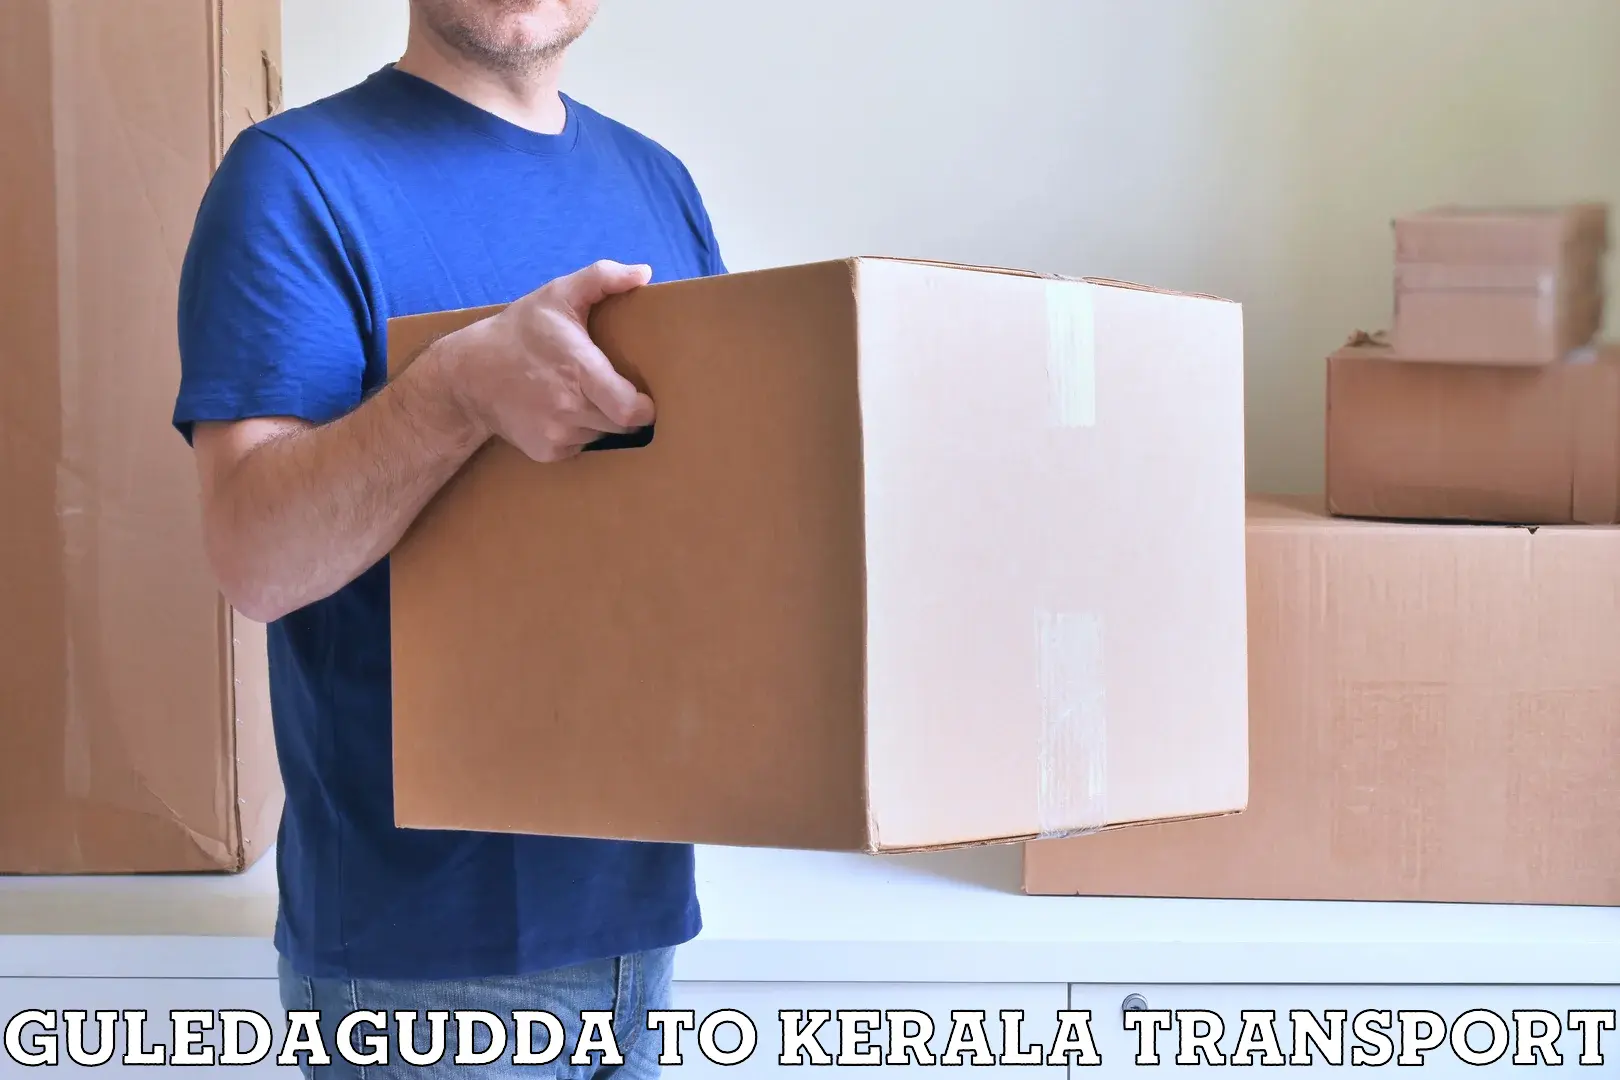 Transport in sharing Guledagudda to Cochin